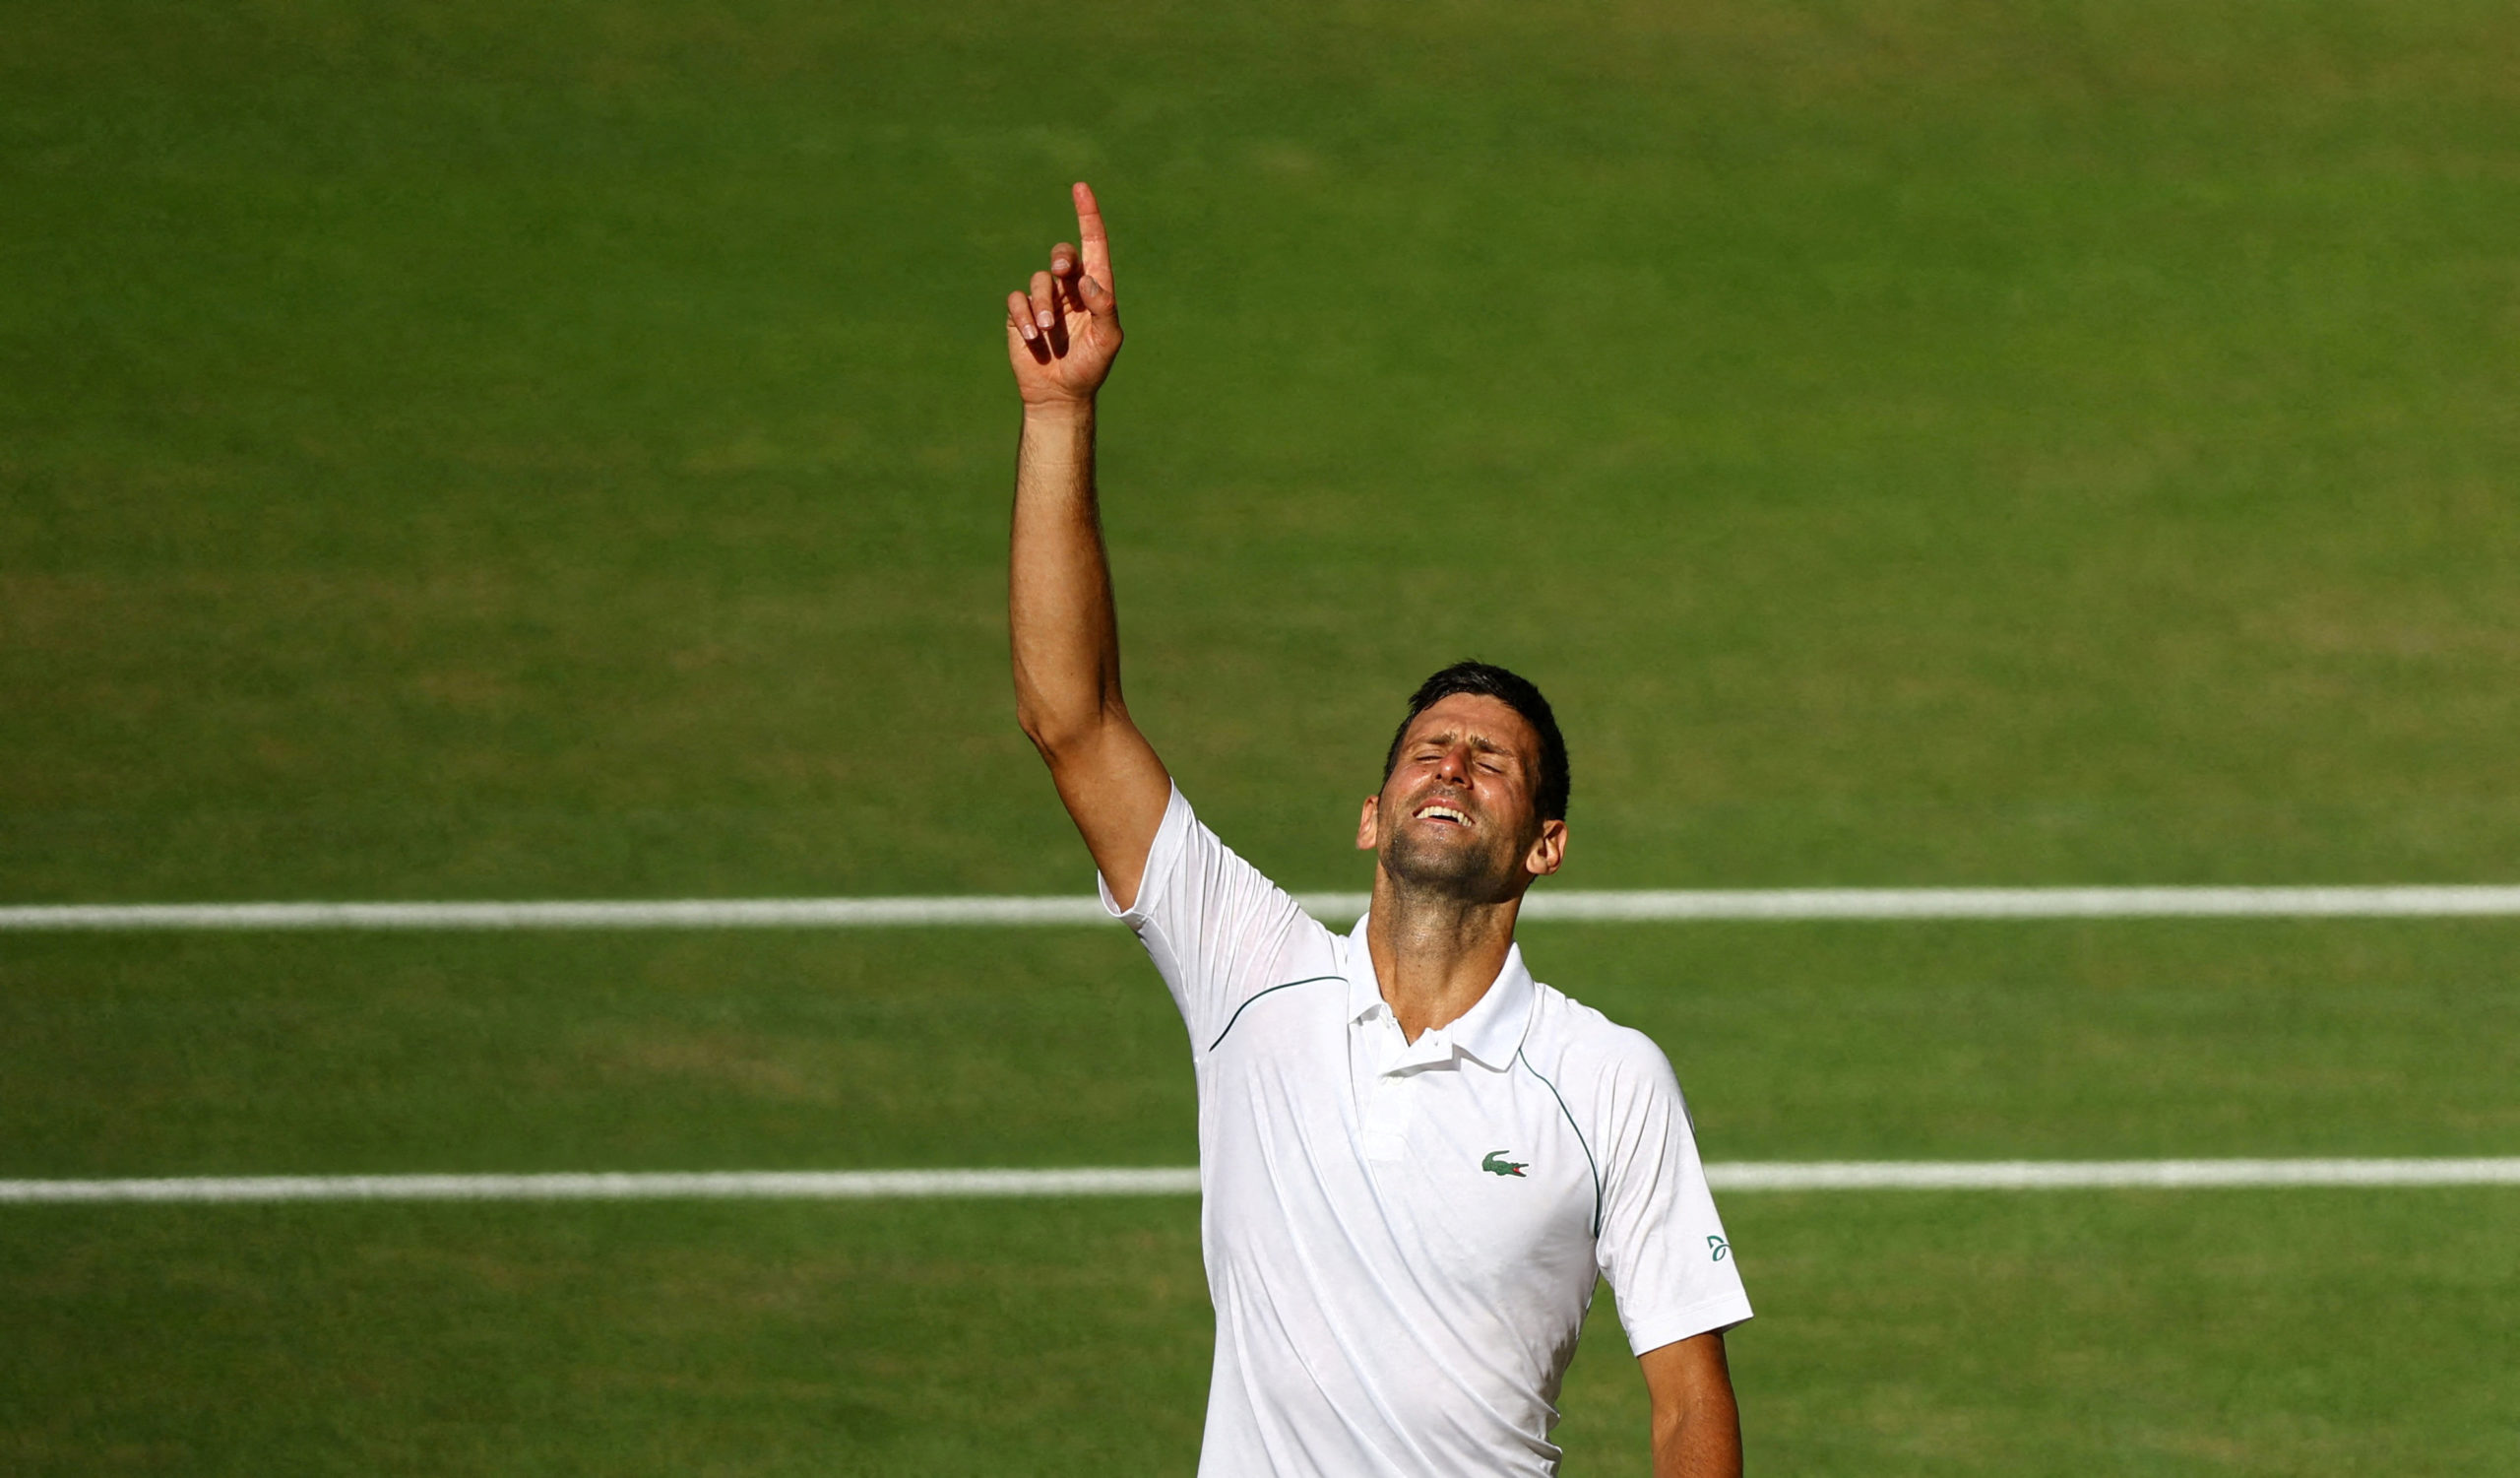 Serbia's Novak Djokovic celebrates after winning the men's singles final against Australia's Nick Kyrgios